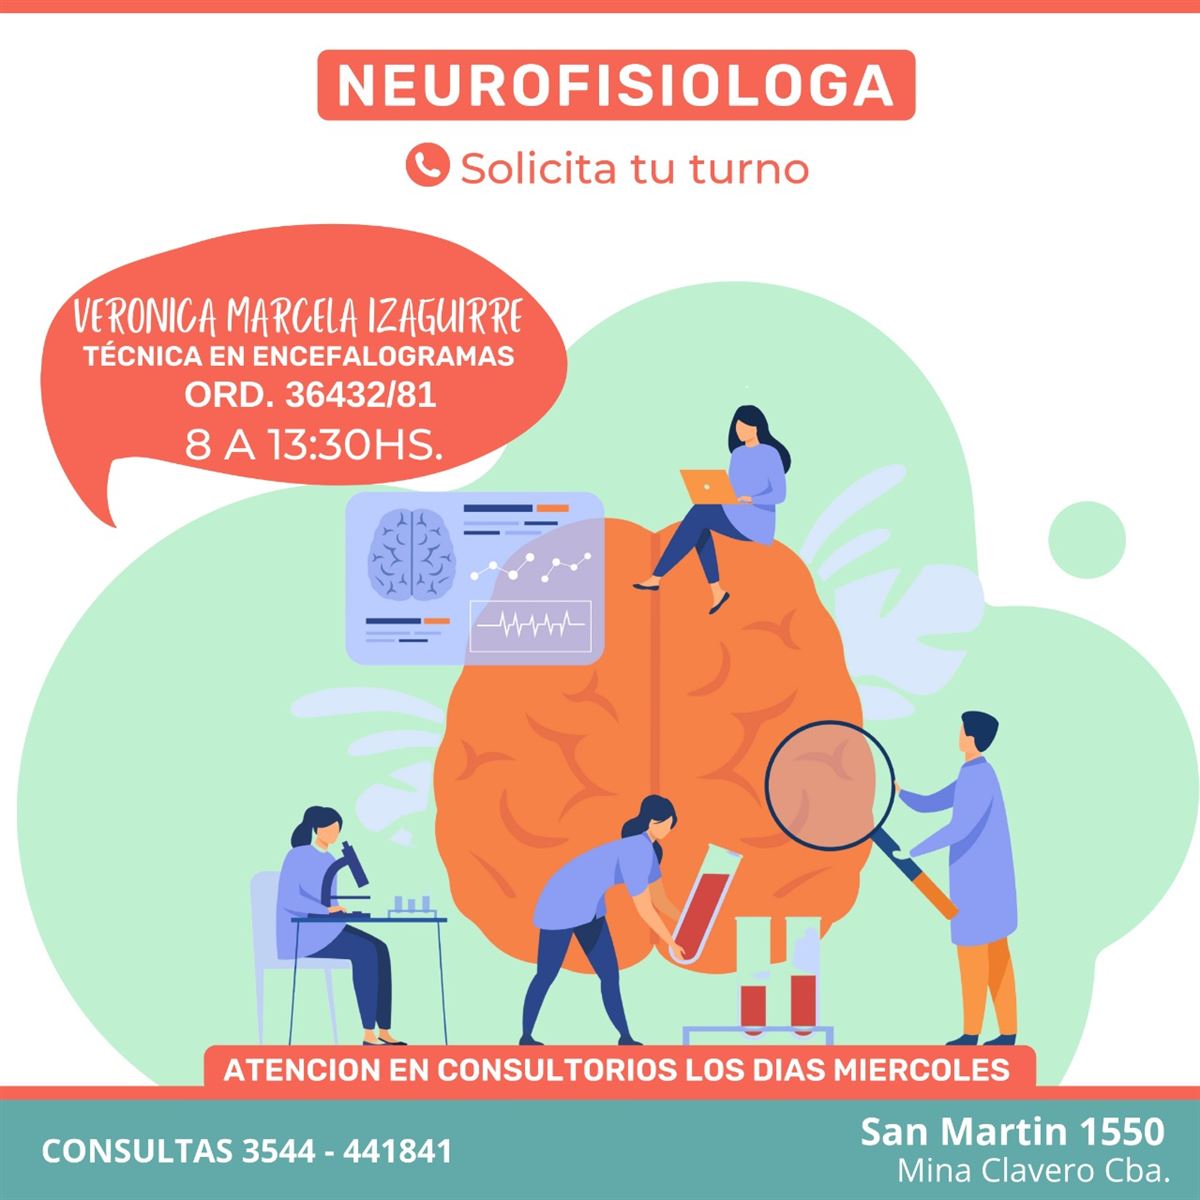 Neurofisiología - InfoGuia Traslasierra - Neurofisiología